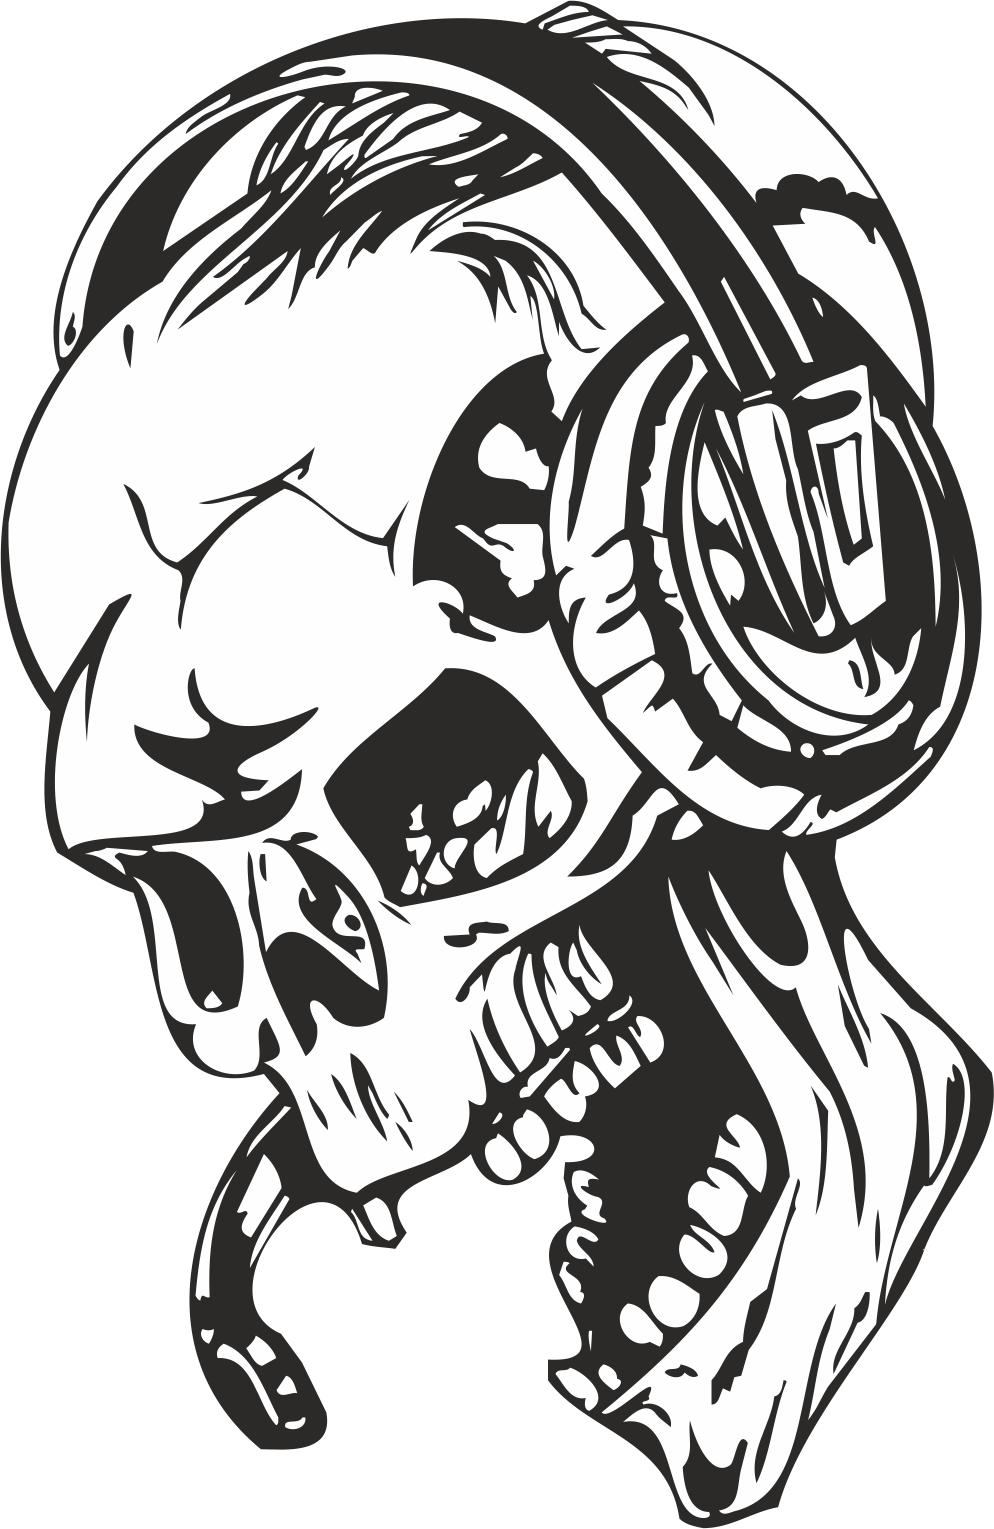 Skull with Headphones Sticker Vector Free Vector cdr Download - 3axis.co